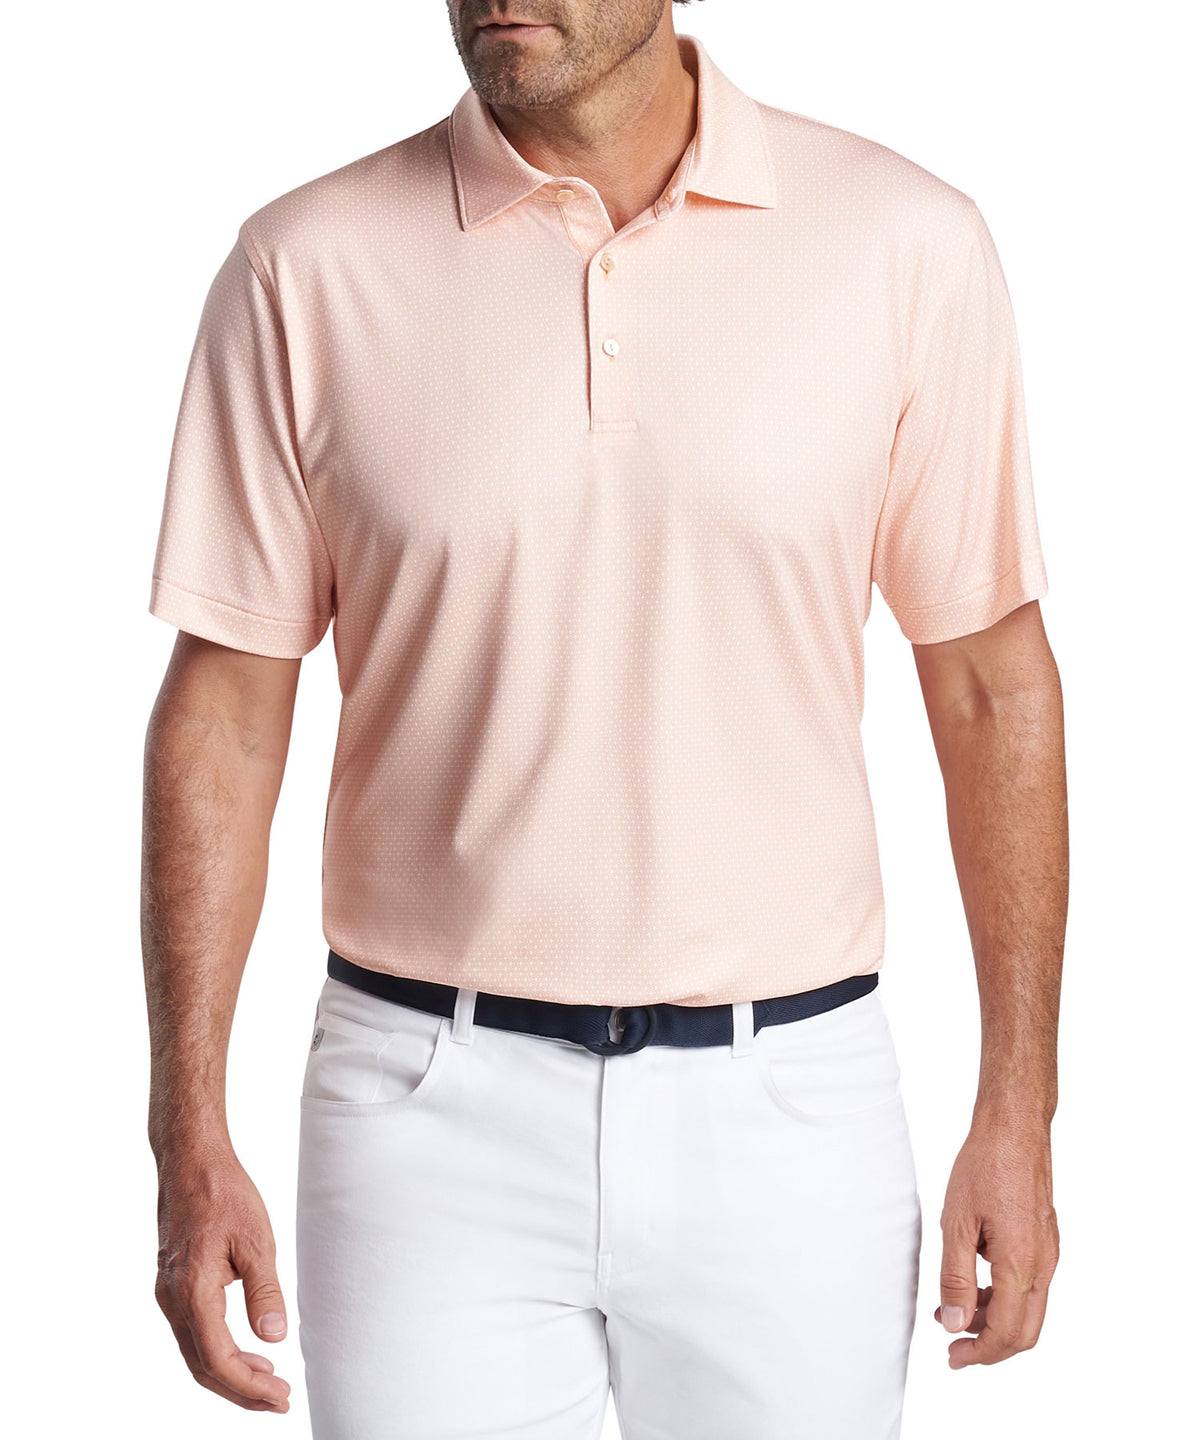 Peter Millar Short Sleeve Tesseract Print Polo Knit Shirt, Big & Tall